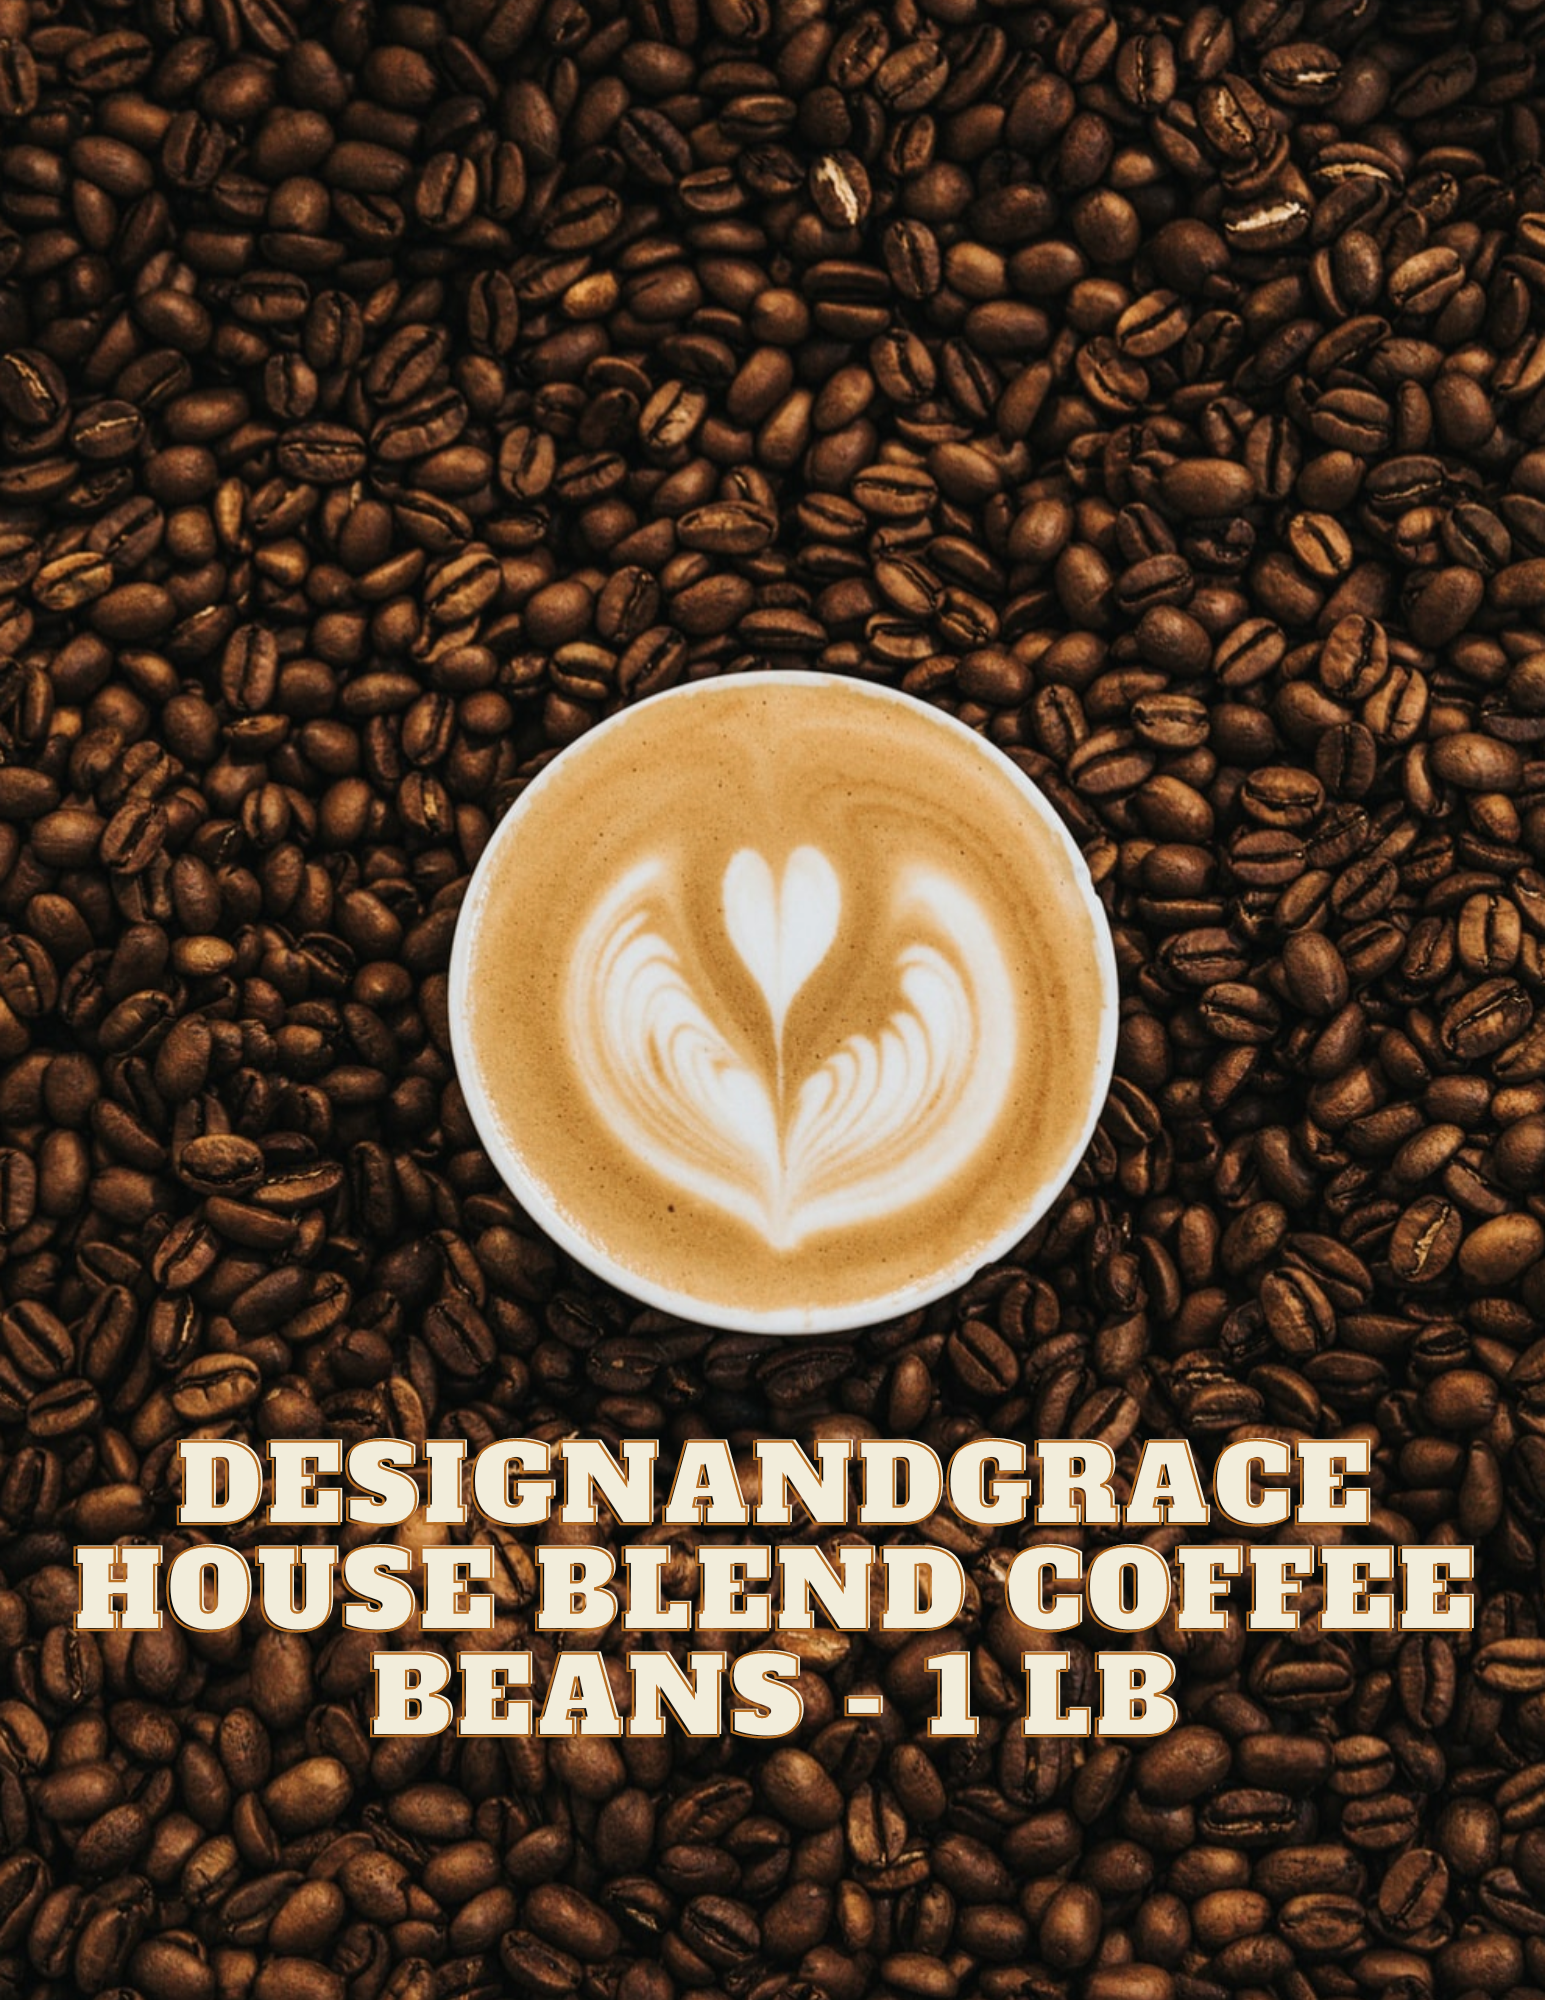 DesignandGrace House Blend Coffee Beans - 1 lb